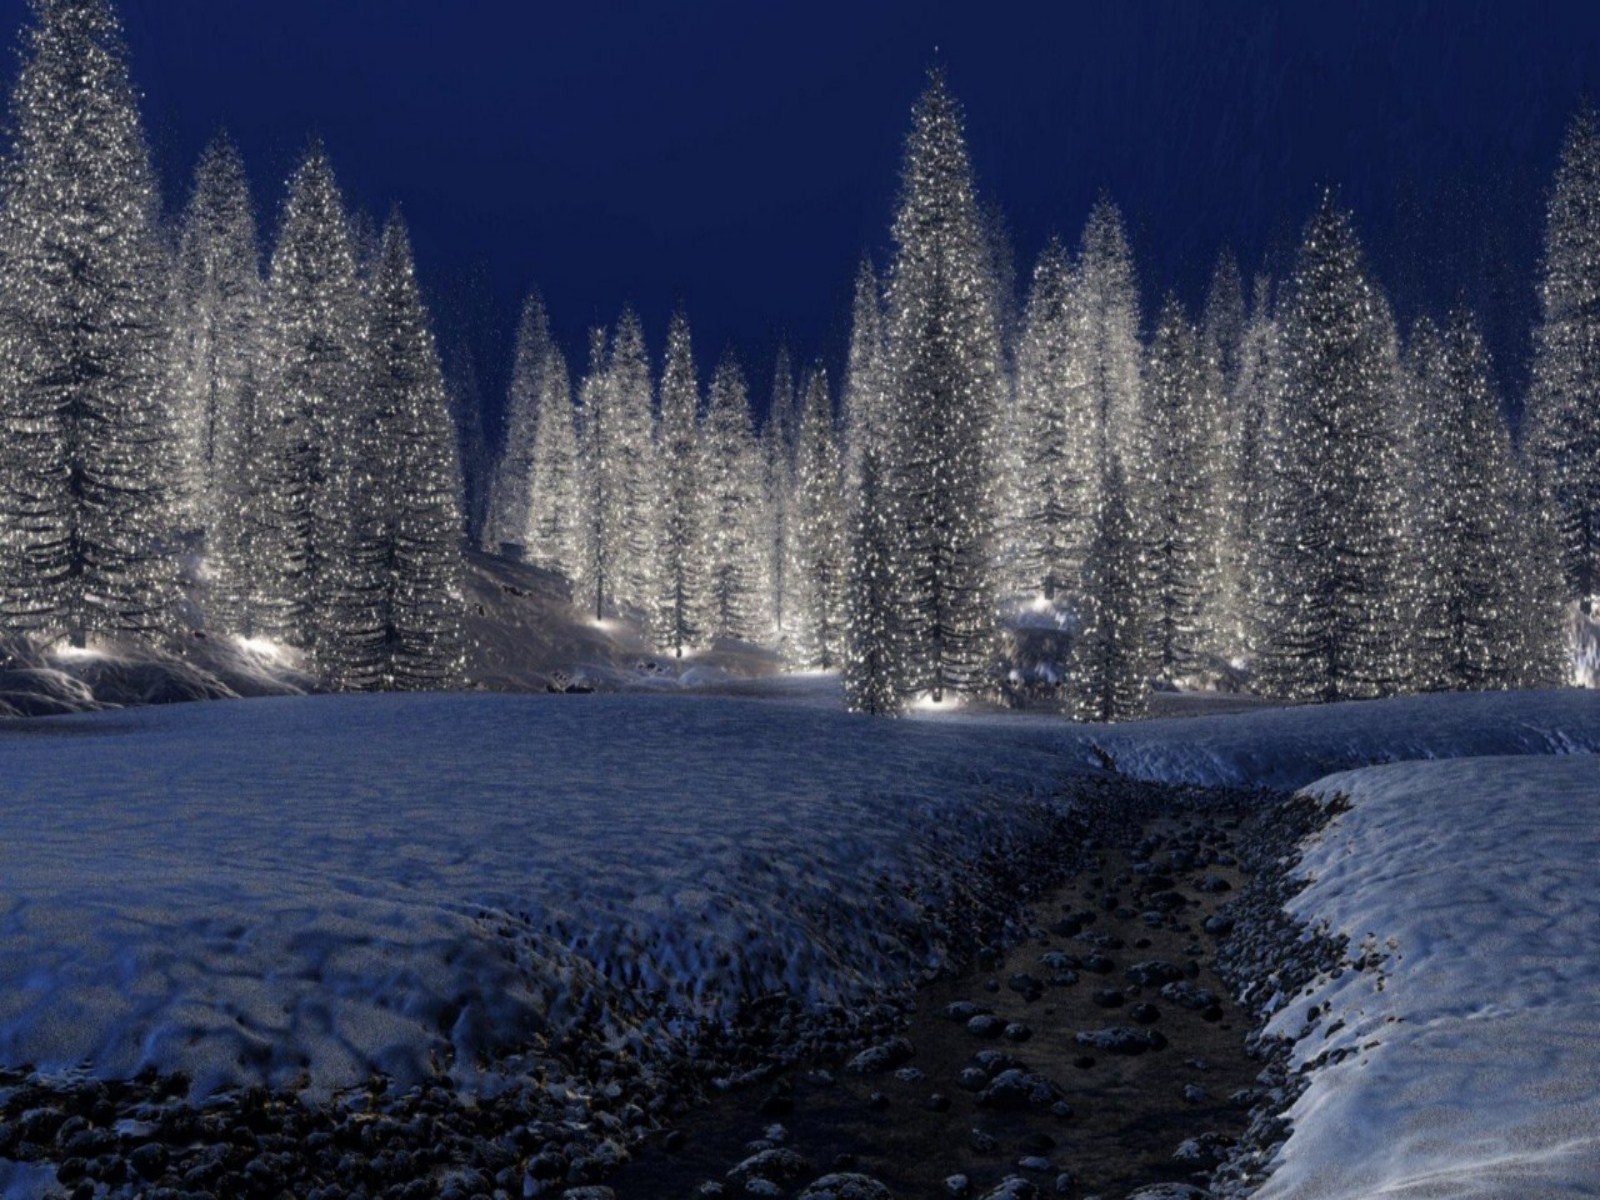 Snowy Christmas Scene Image